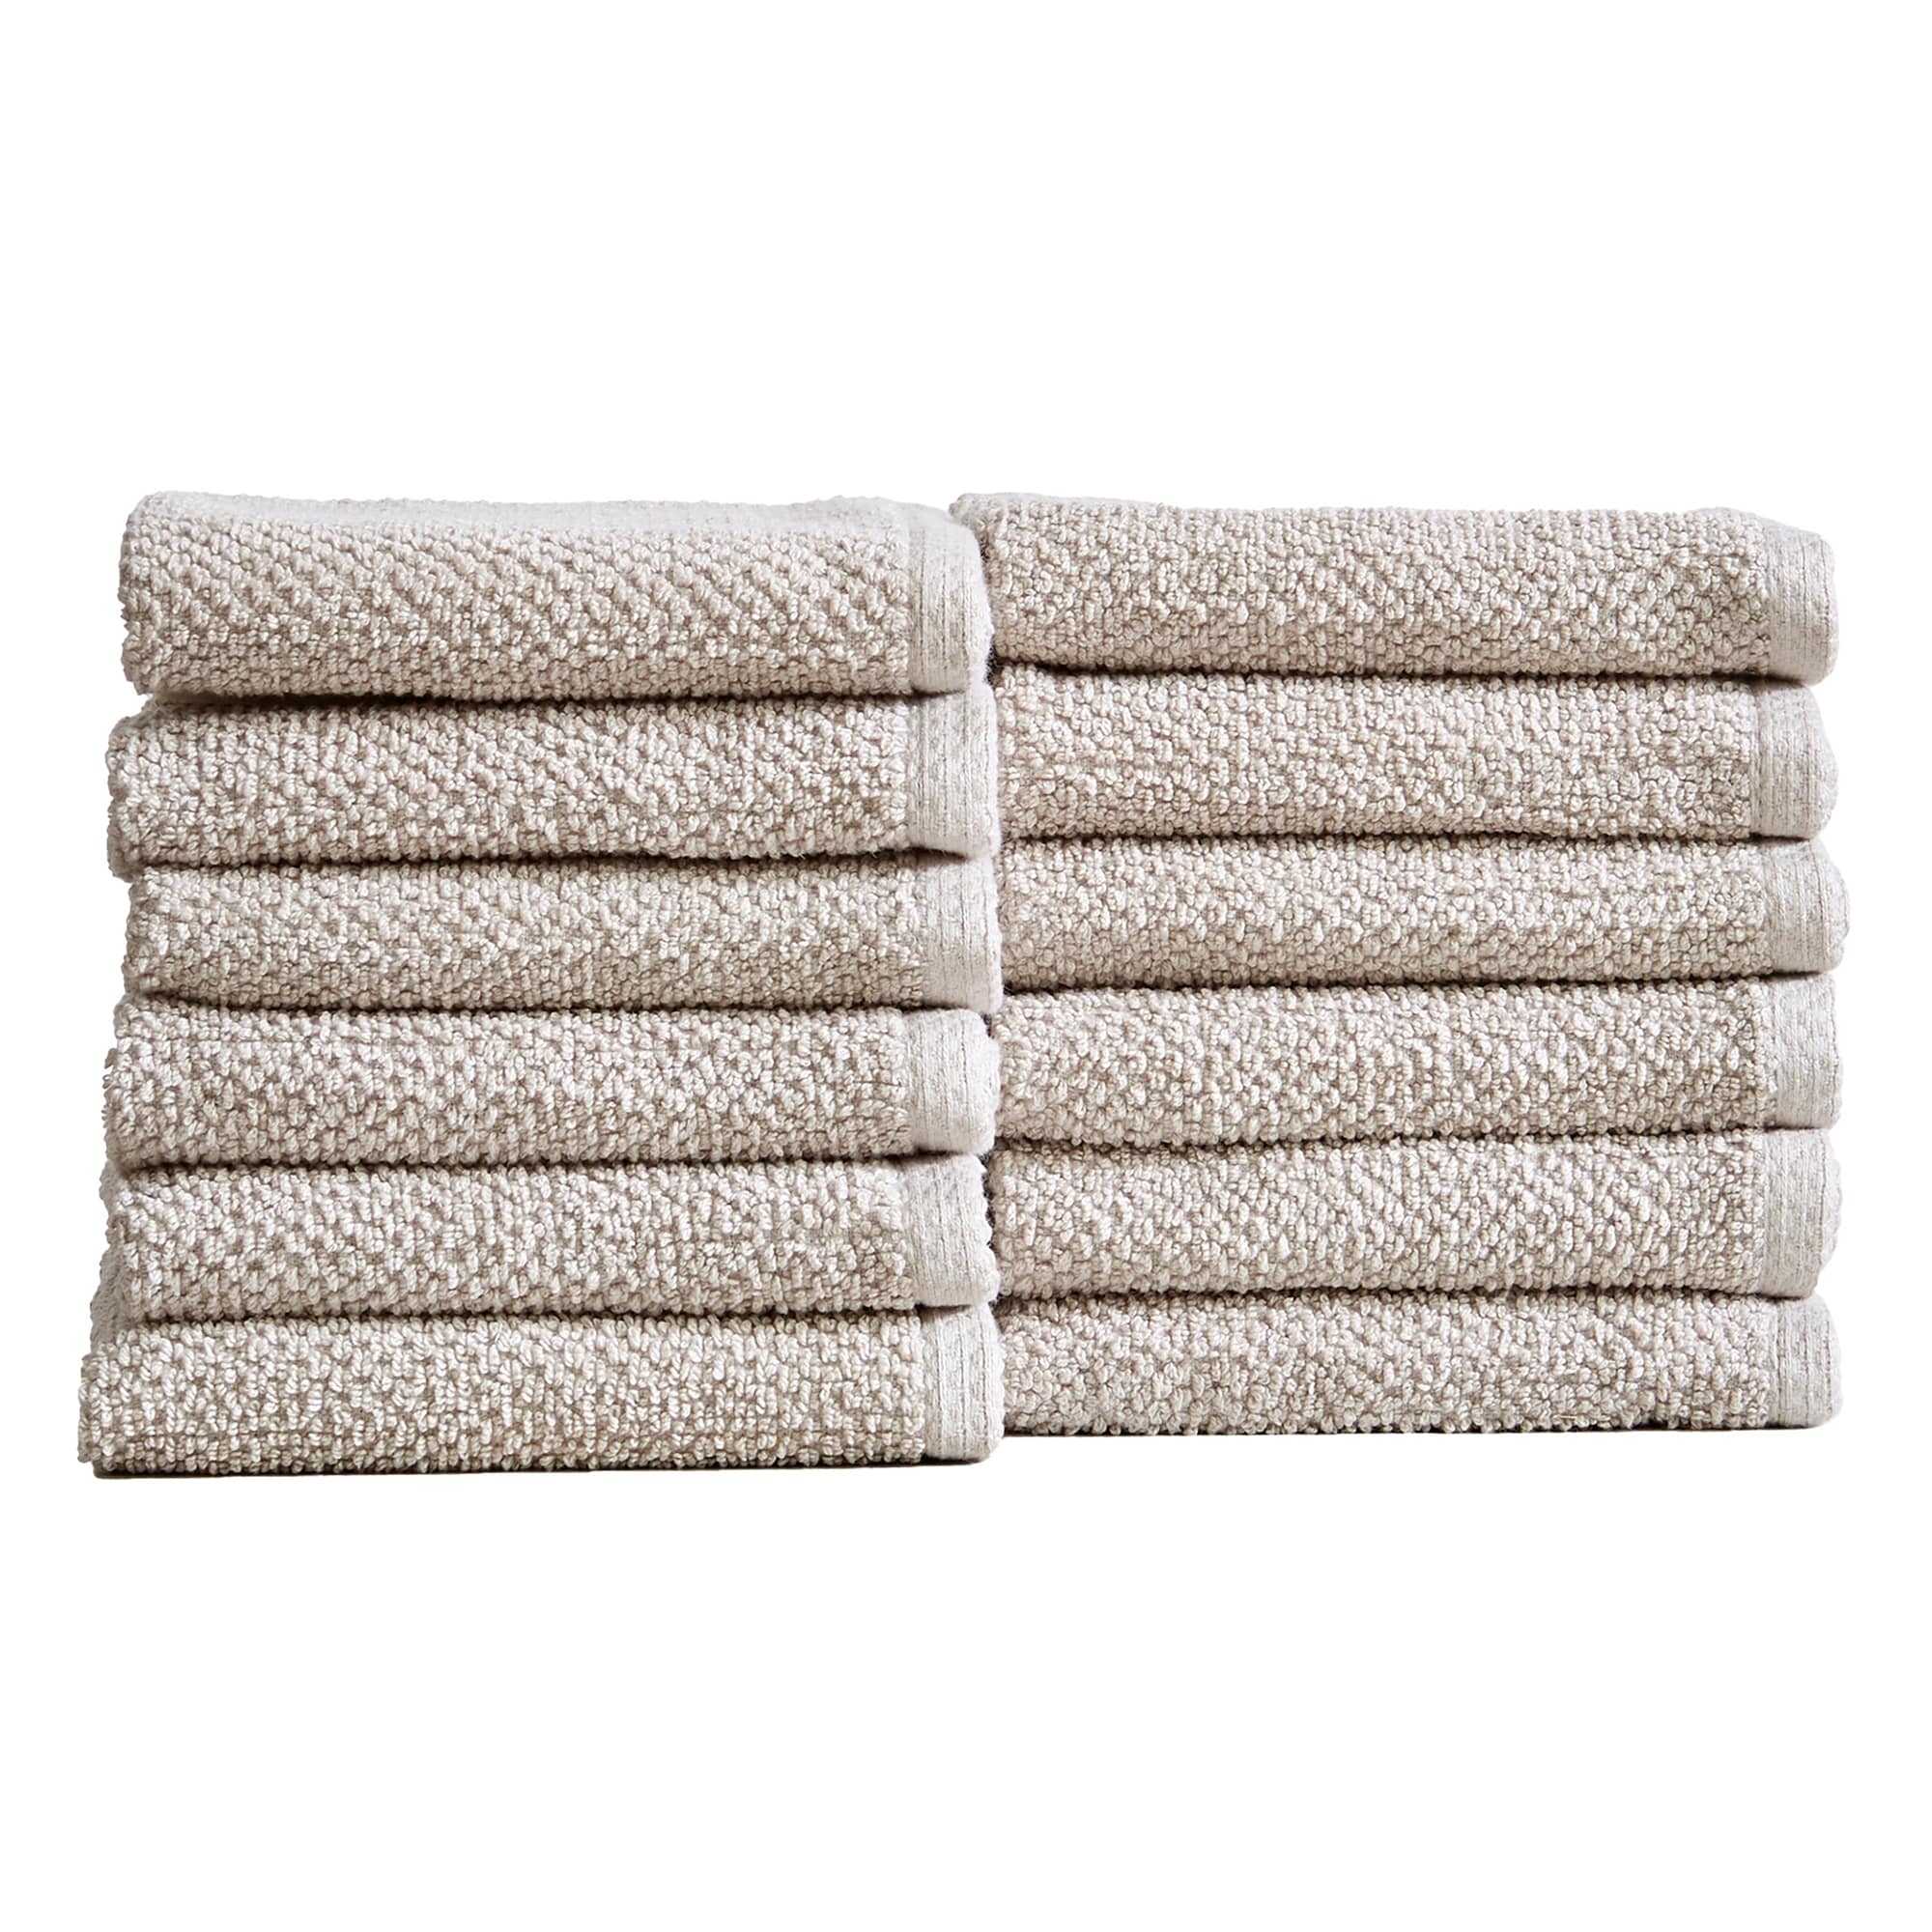 Luxury 100-percent Cotton 12-piece Towel Set with Bath Sheets - On Sale -  Bed Bath & Beyond - 8891936